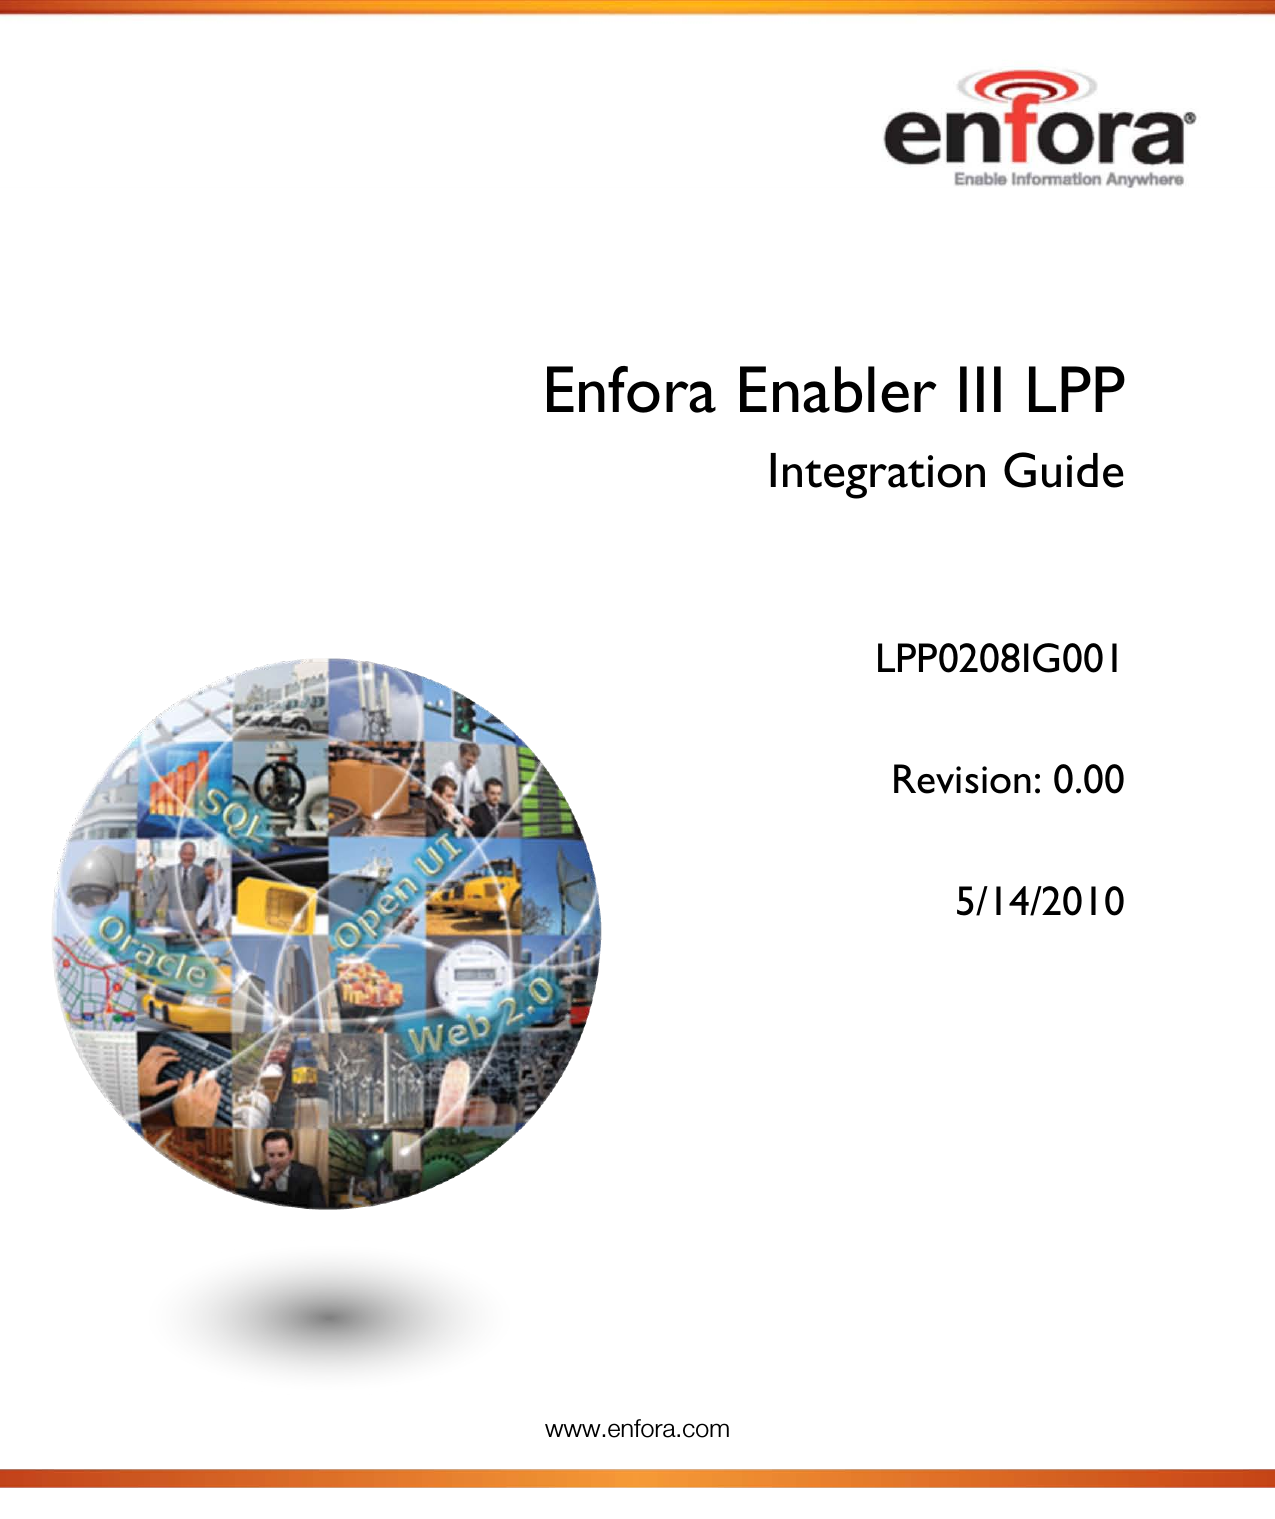  www.enfora.com      Enfora Enabler III LPP Integration Guide   LPP0208IG001  Revision: 0.00  5/14/2010     